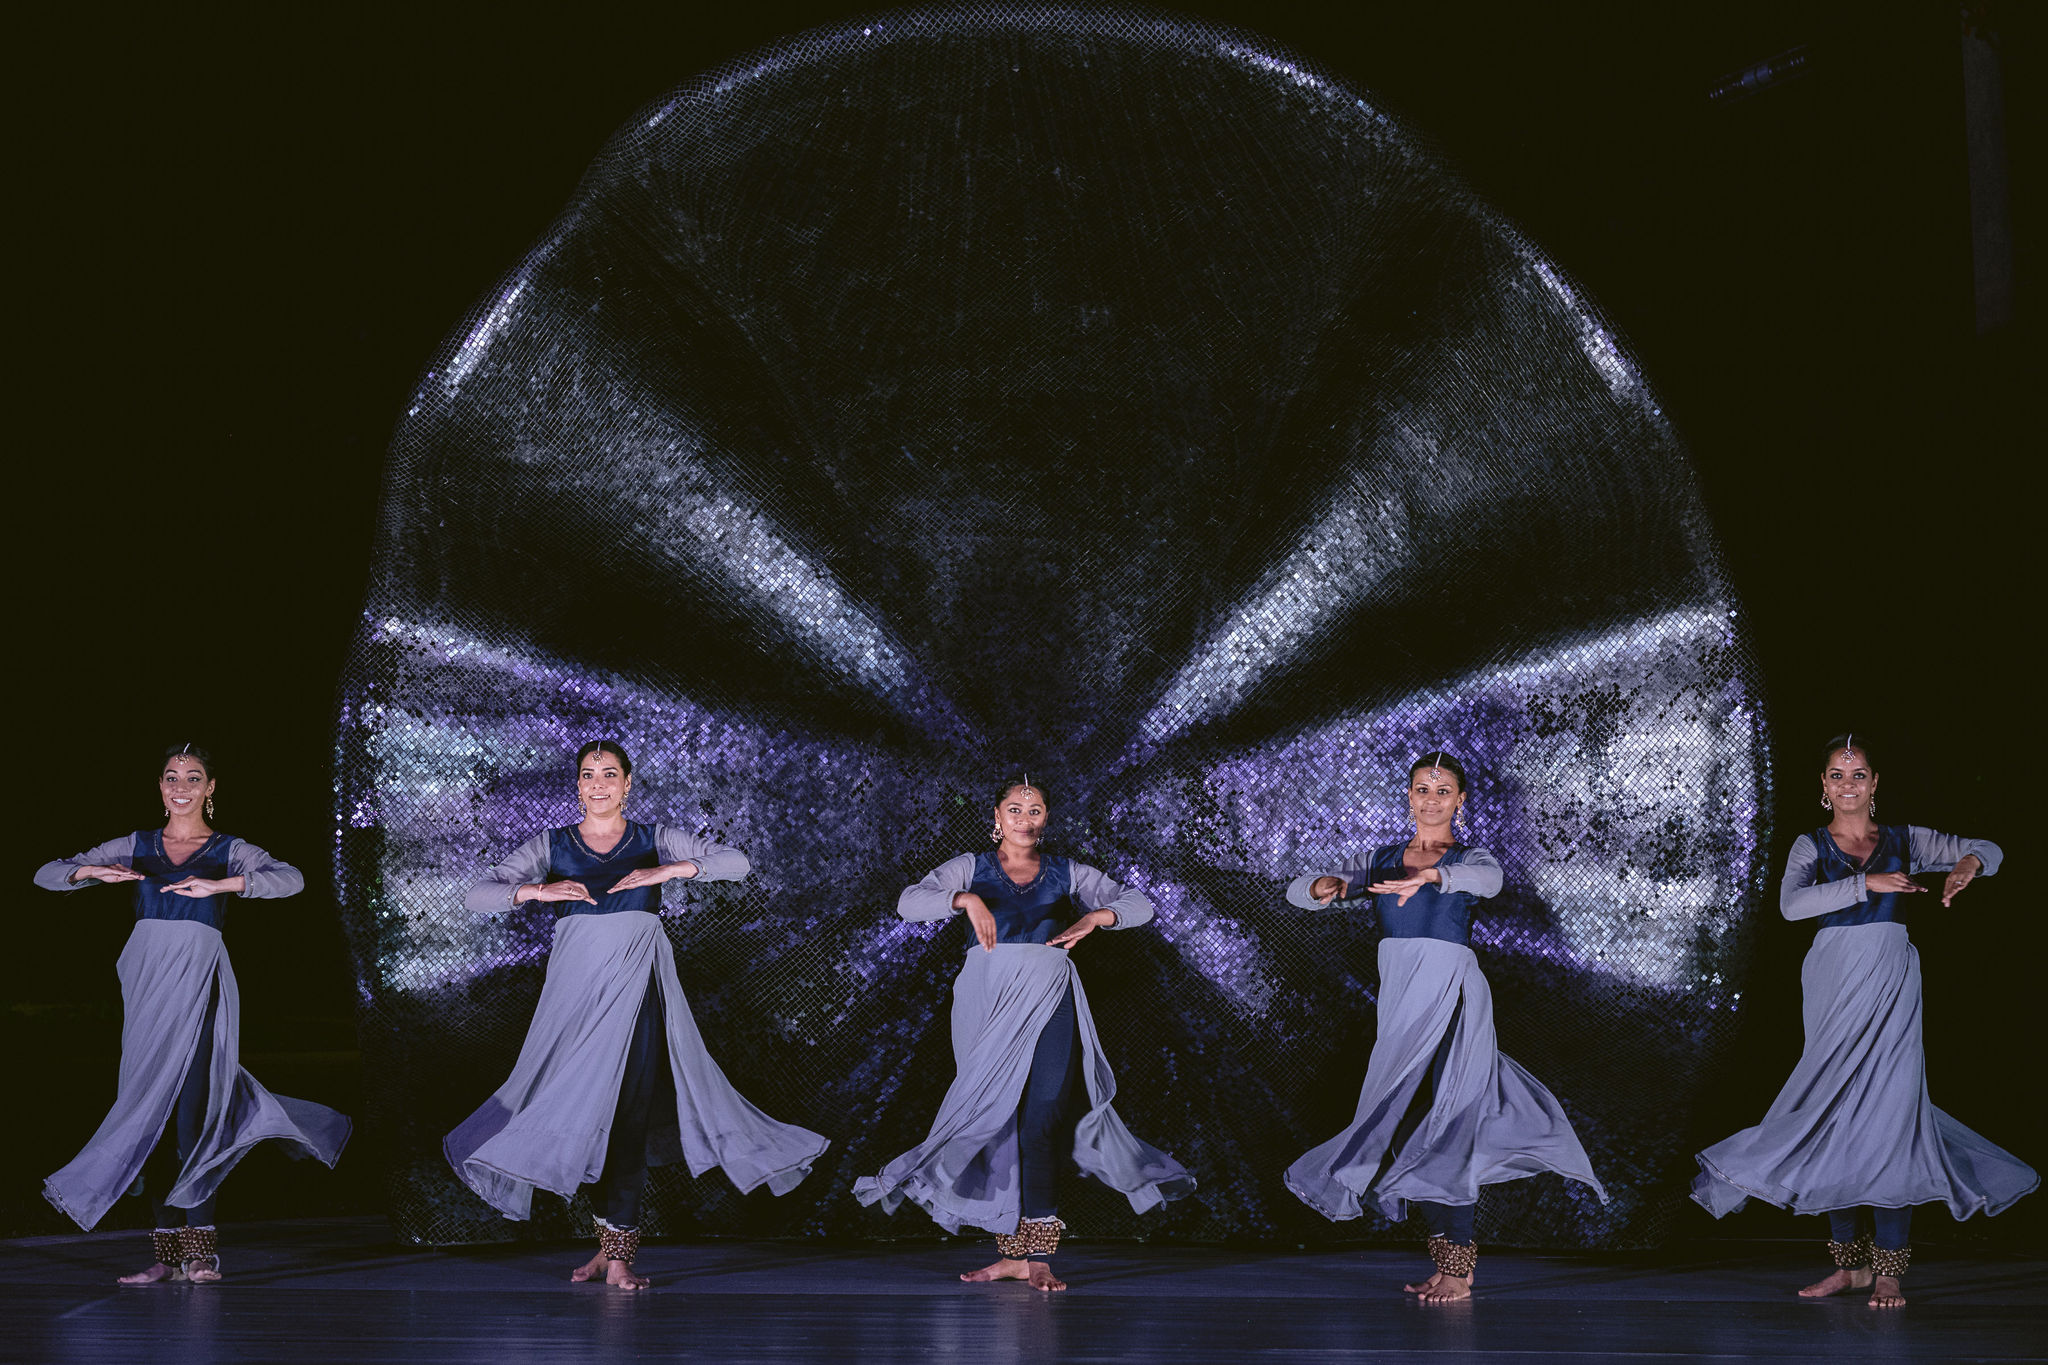 Five women in blue dresses dance on stage